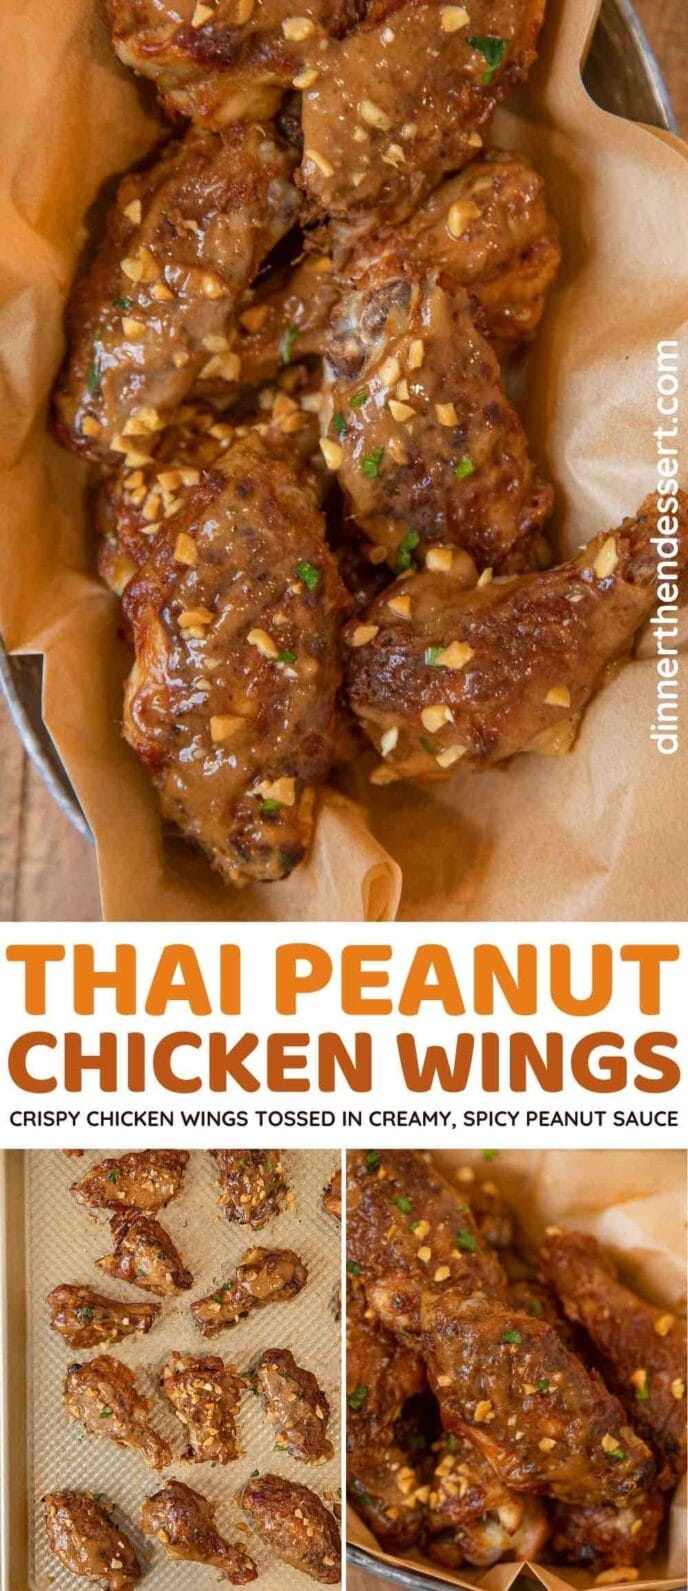 Thai Peanut Chicken Wings collage